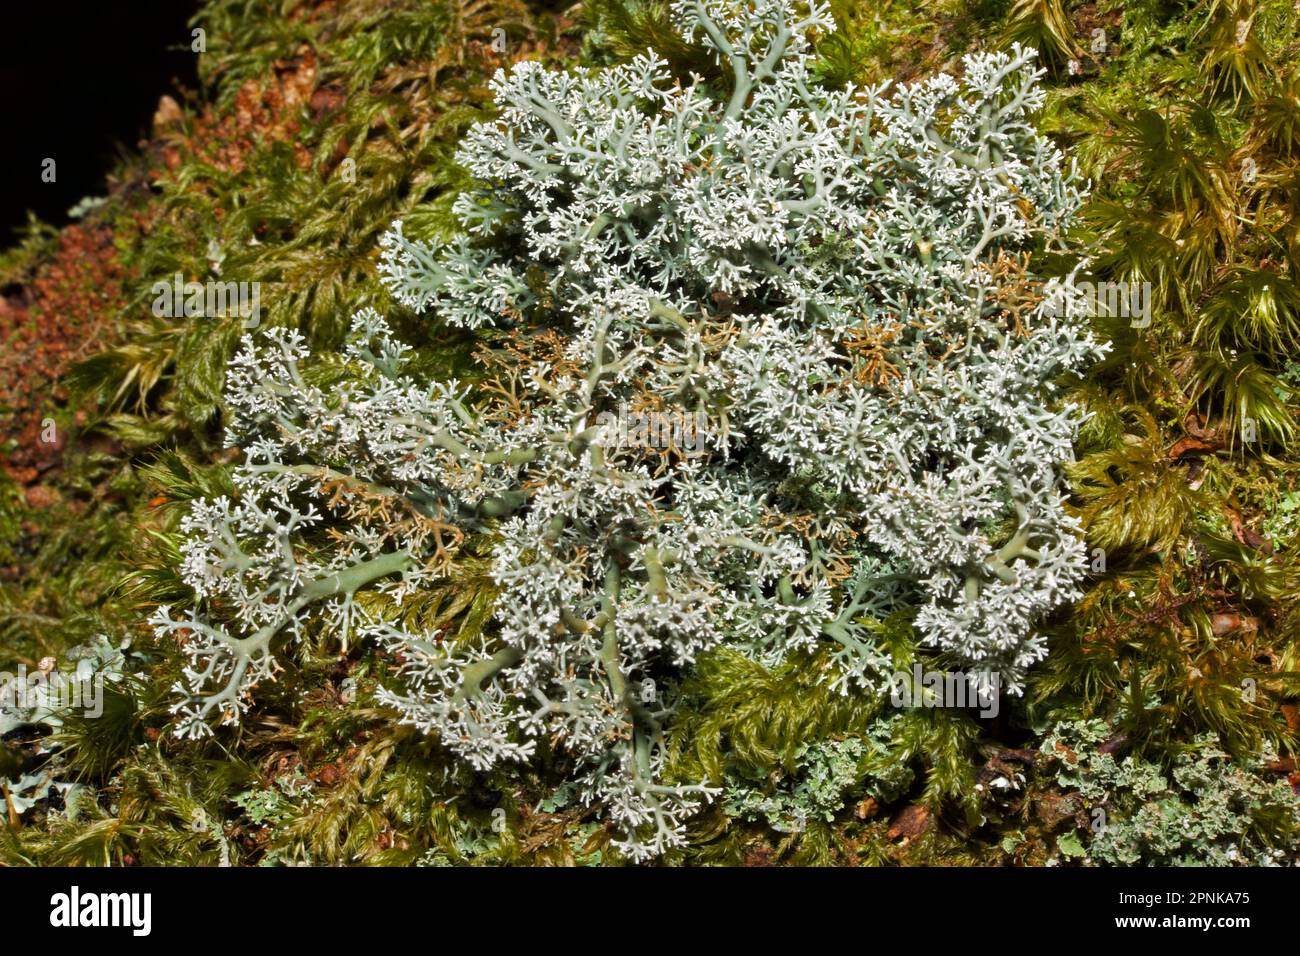 Sphaerophorus globosus is a fructicose lichen occurring on mossy, acidic upland rocks and trees. It has a cosmopolitan distribution. Stock Photo